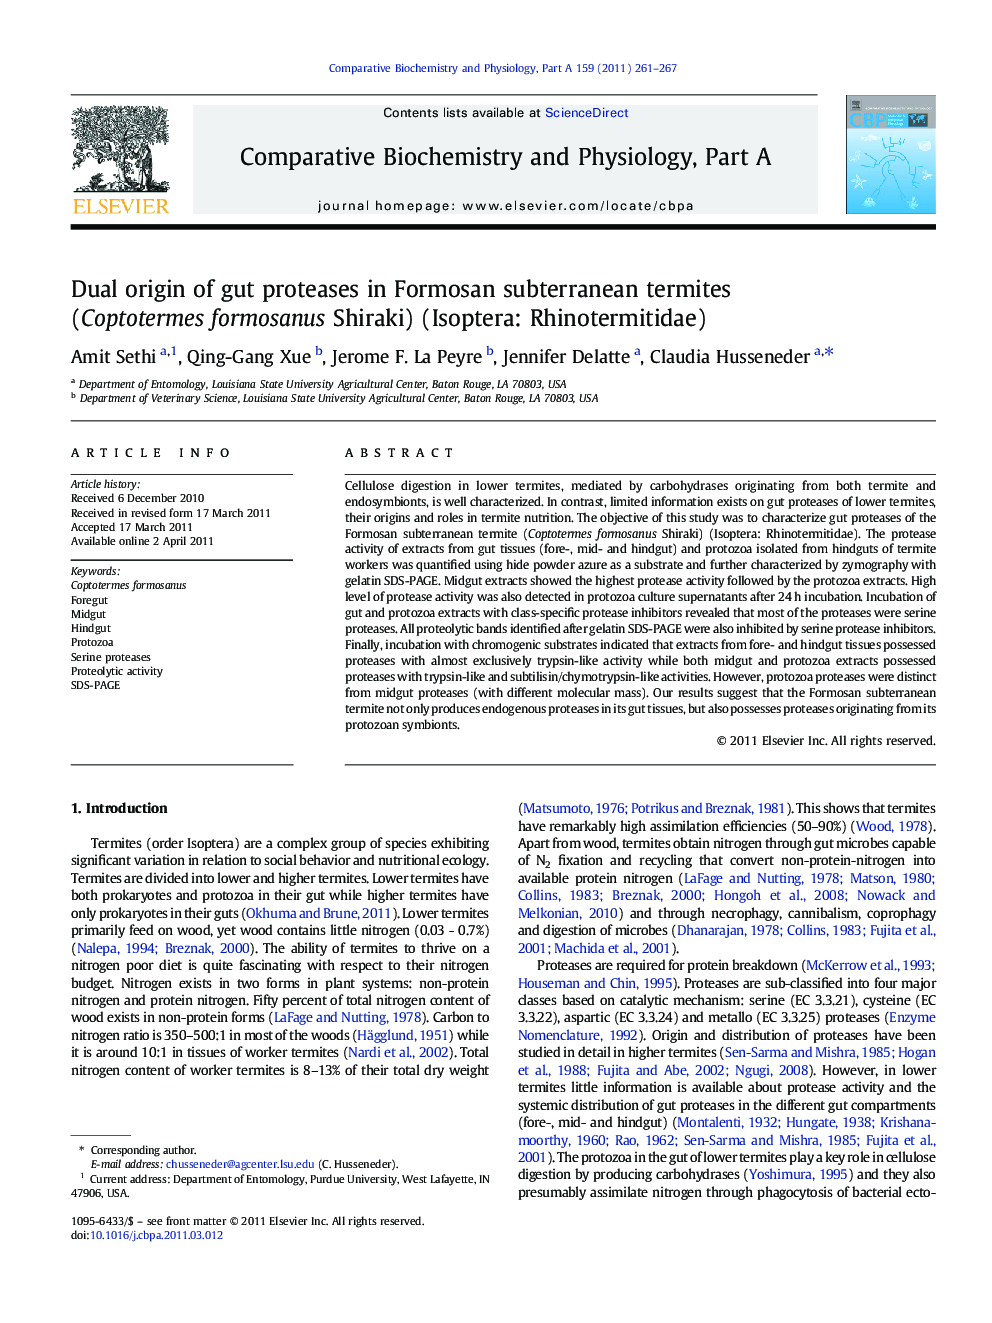 Dual origin of gut proteases in Formosan subterranean termites (Coptotermes formosanus Shiraki) (Isoptera: Rhinotermitidae)